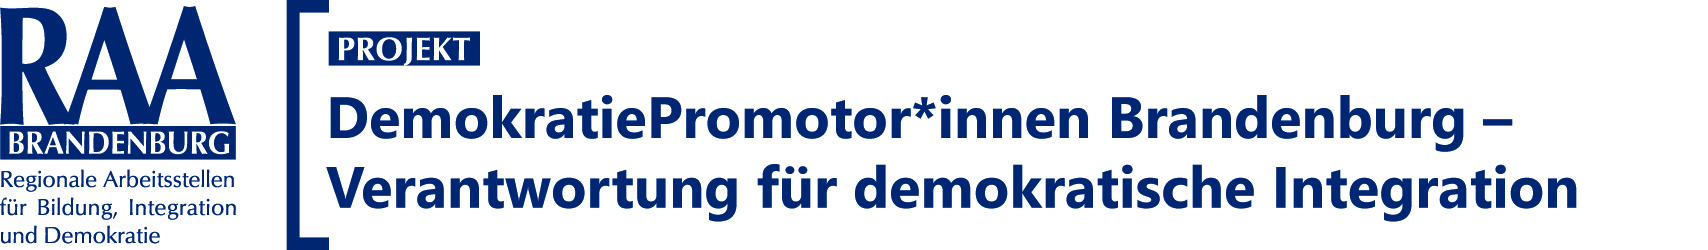 Logo DemokratiePromotor*innen Brandenburg 